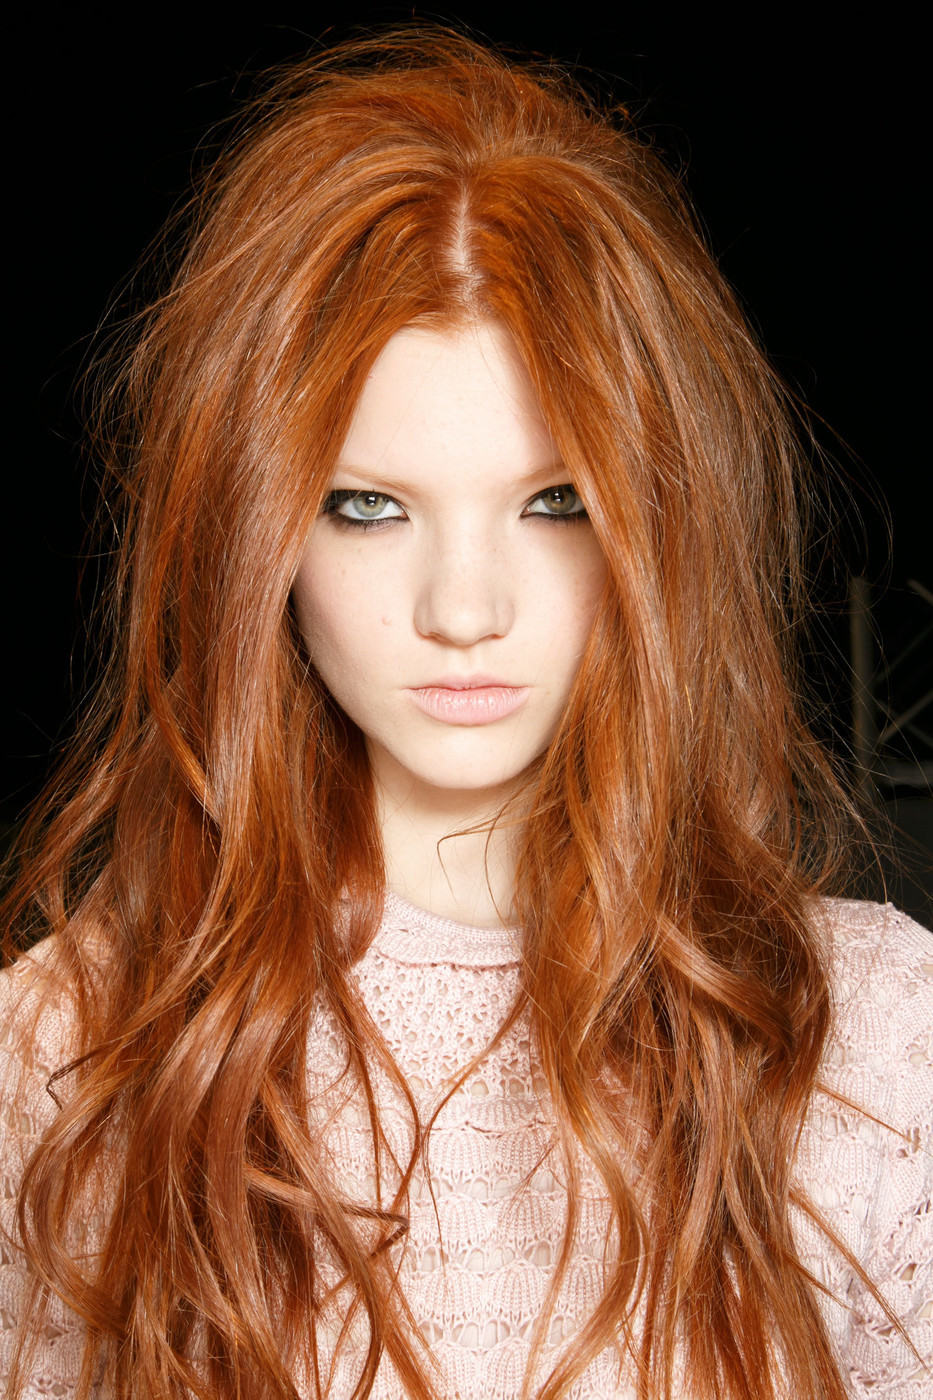 hottest instagram models redhead